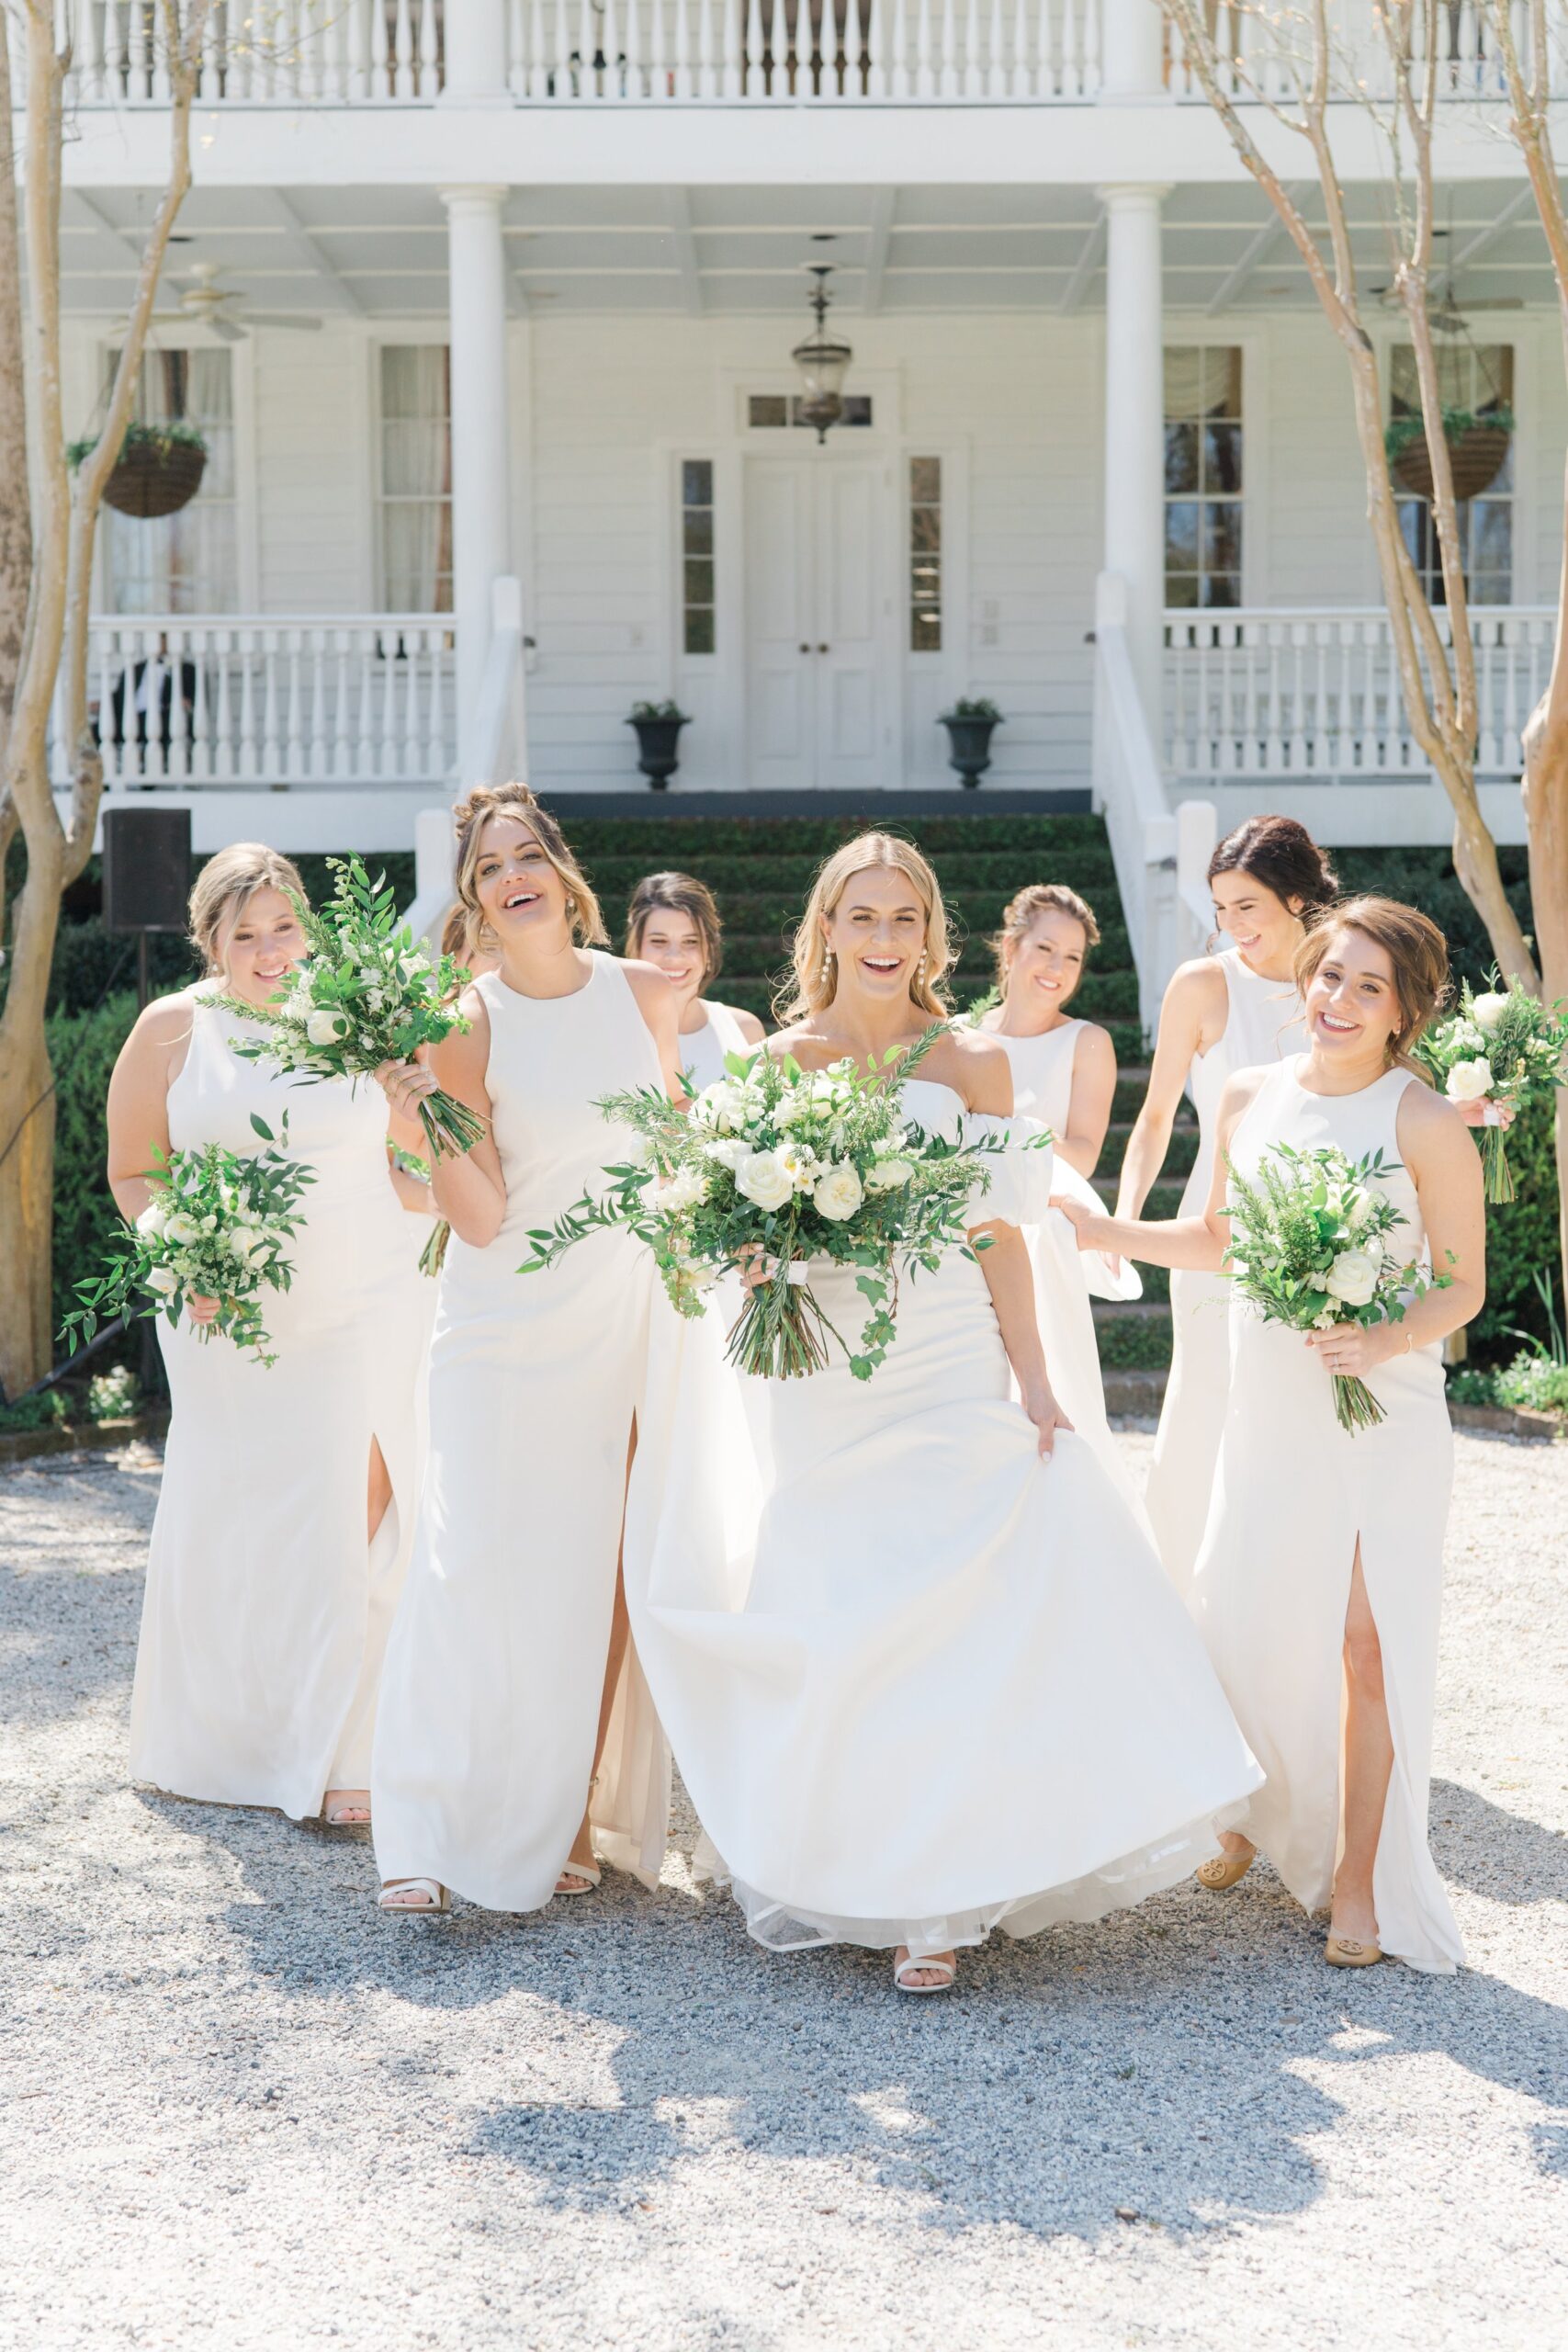 Charleston Dream Wedding. White Bridesmaids dresses. Old Wide Awake Charleston Spring Wedding. Bride and Bridesmaids